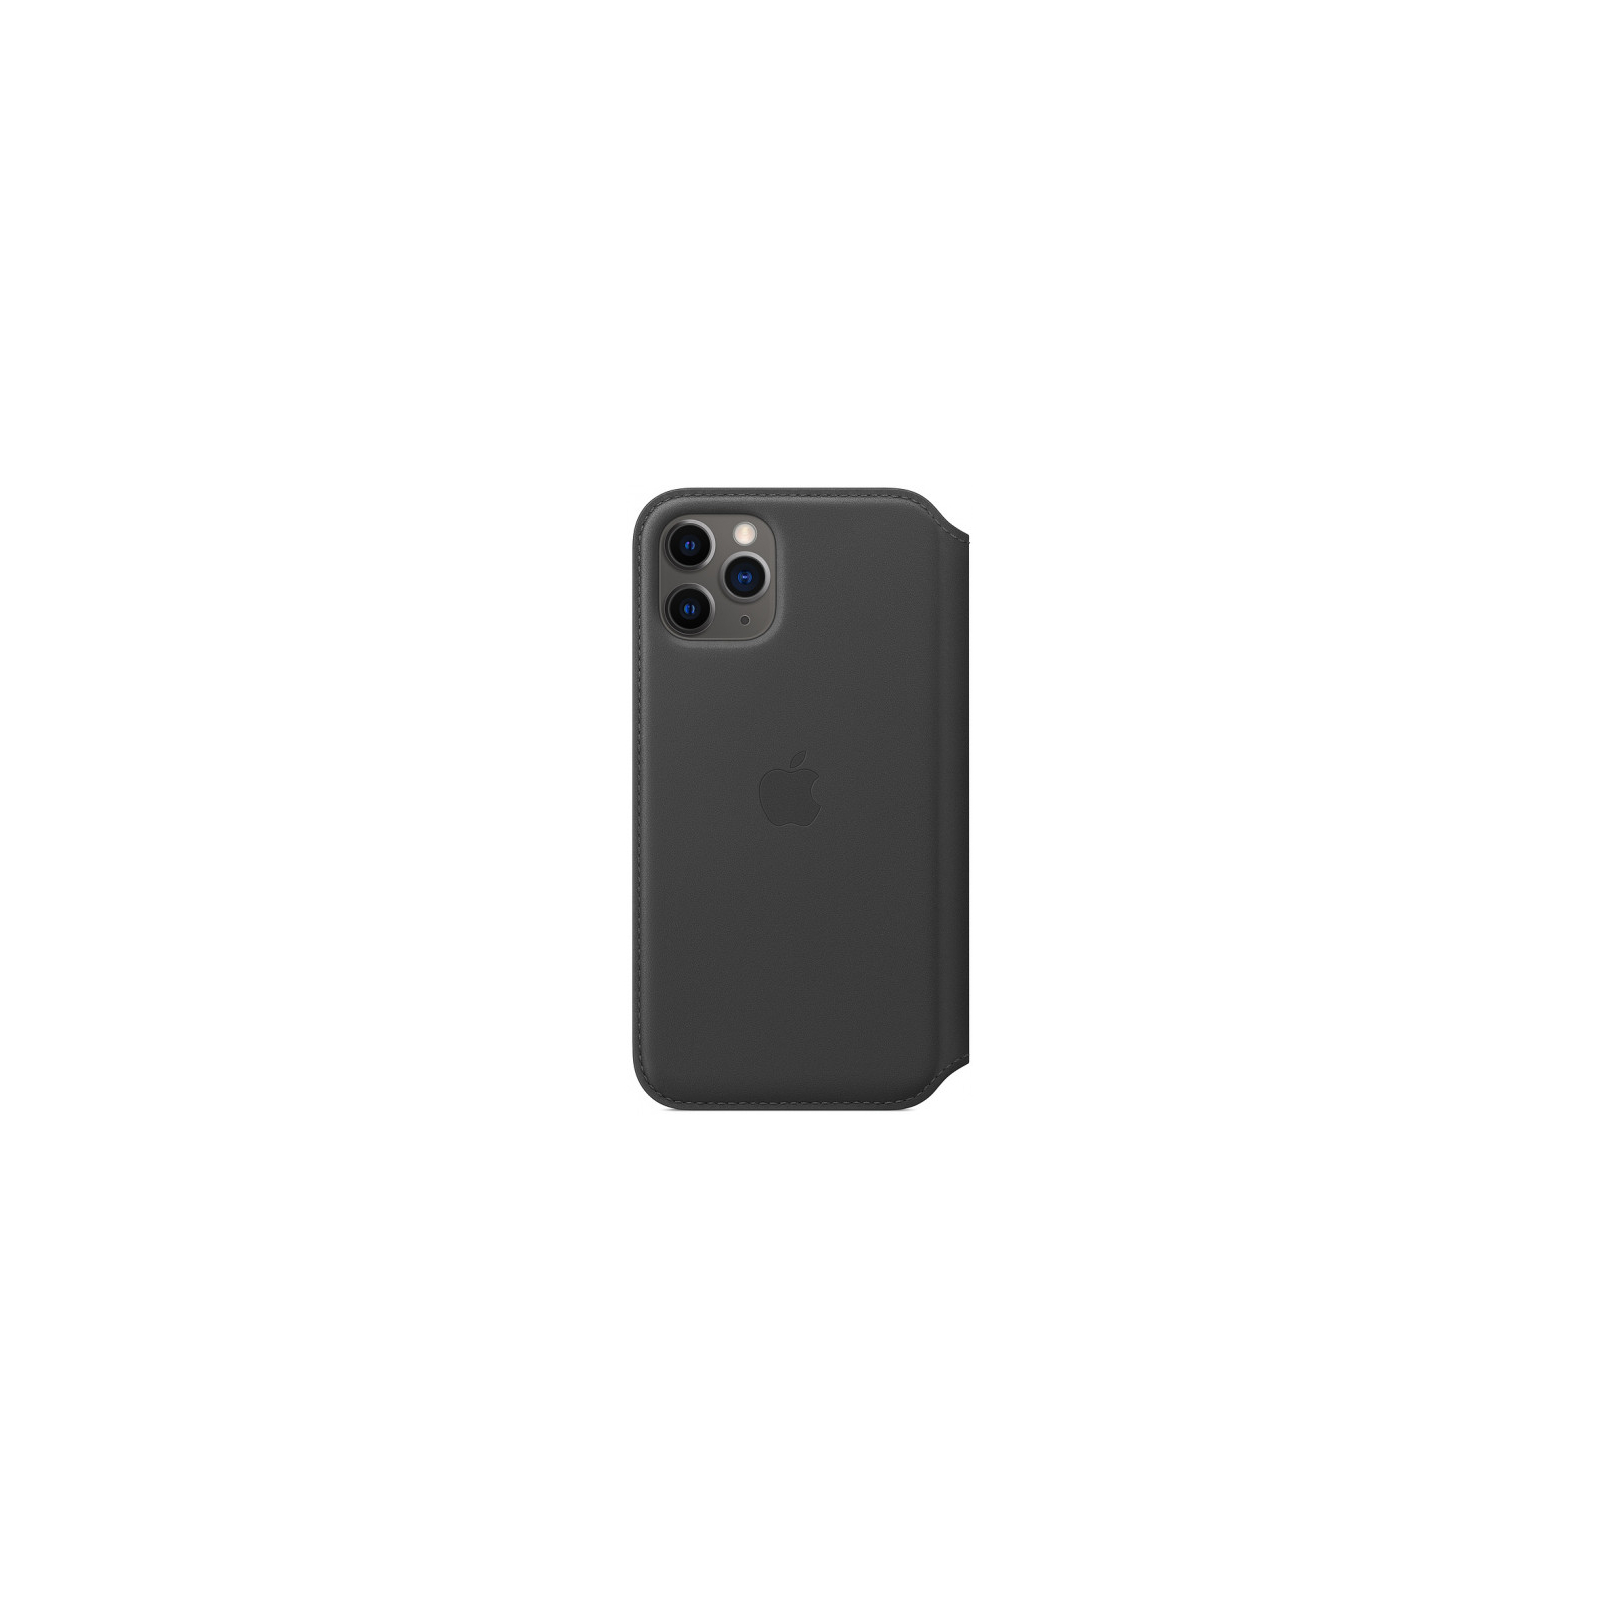 Чехол для мобильного телефона Apple iPhone 11 Pro Leather Folio - Black (MX062ZM/A)